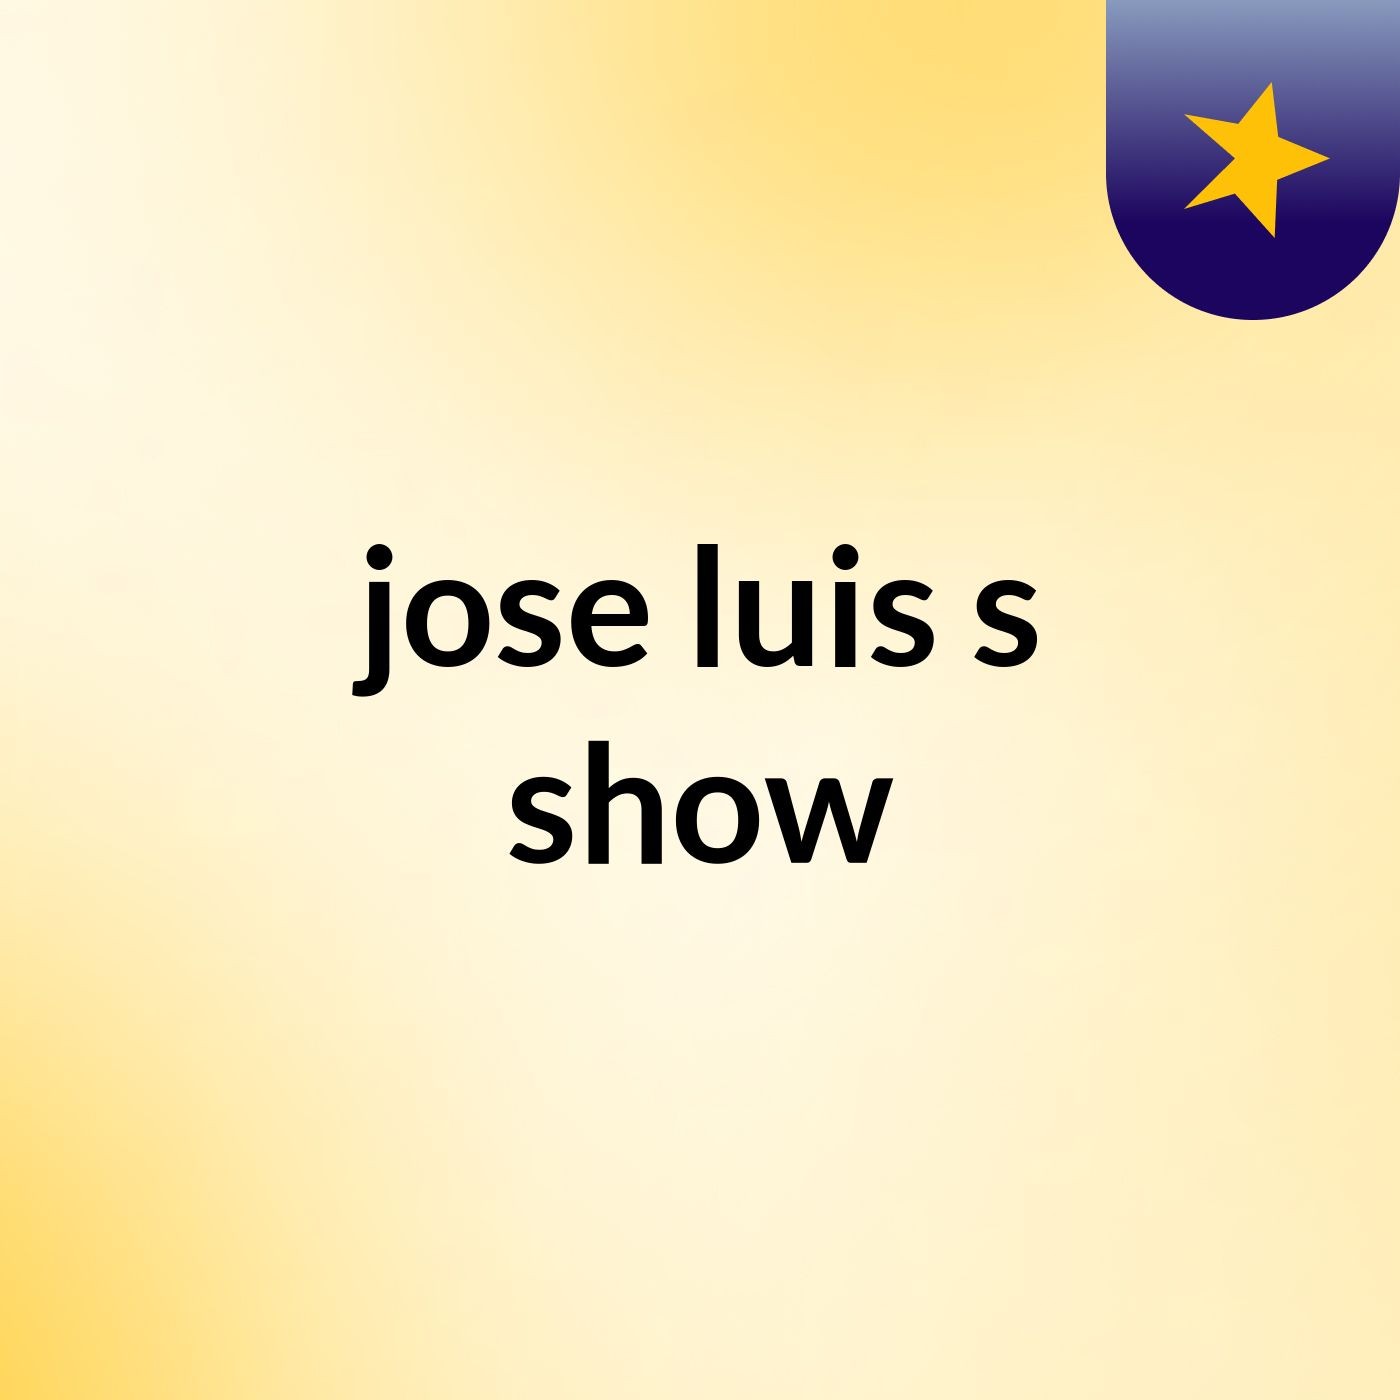 jose luis's show